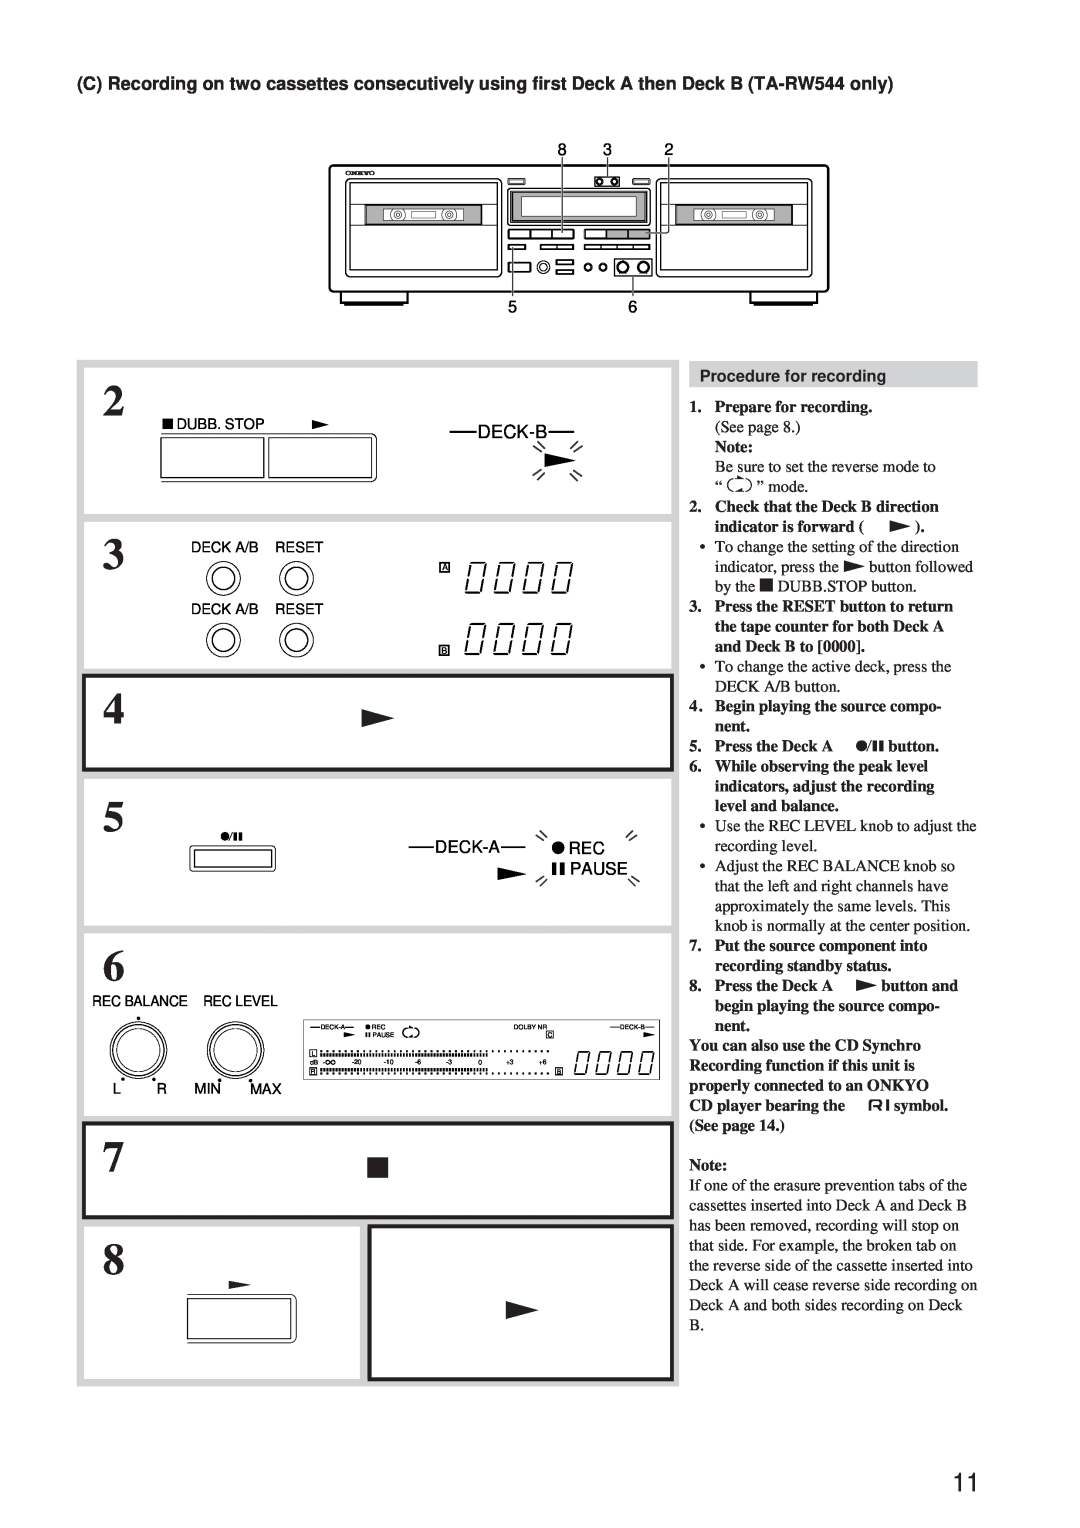 Onkyo TA-RW344, TA-RW544 instruction manual Deck-B, Deck-A, Pause, Procedure for recording 